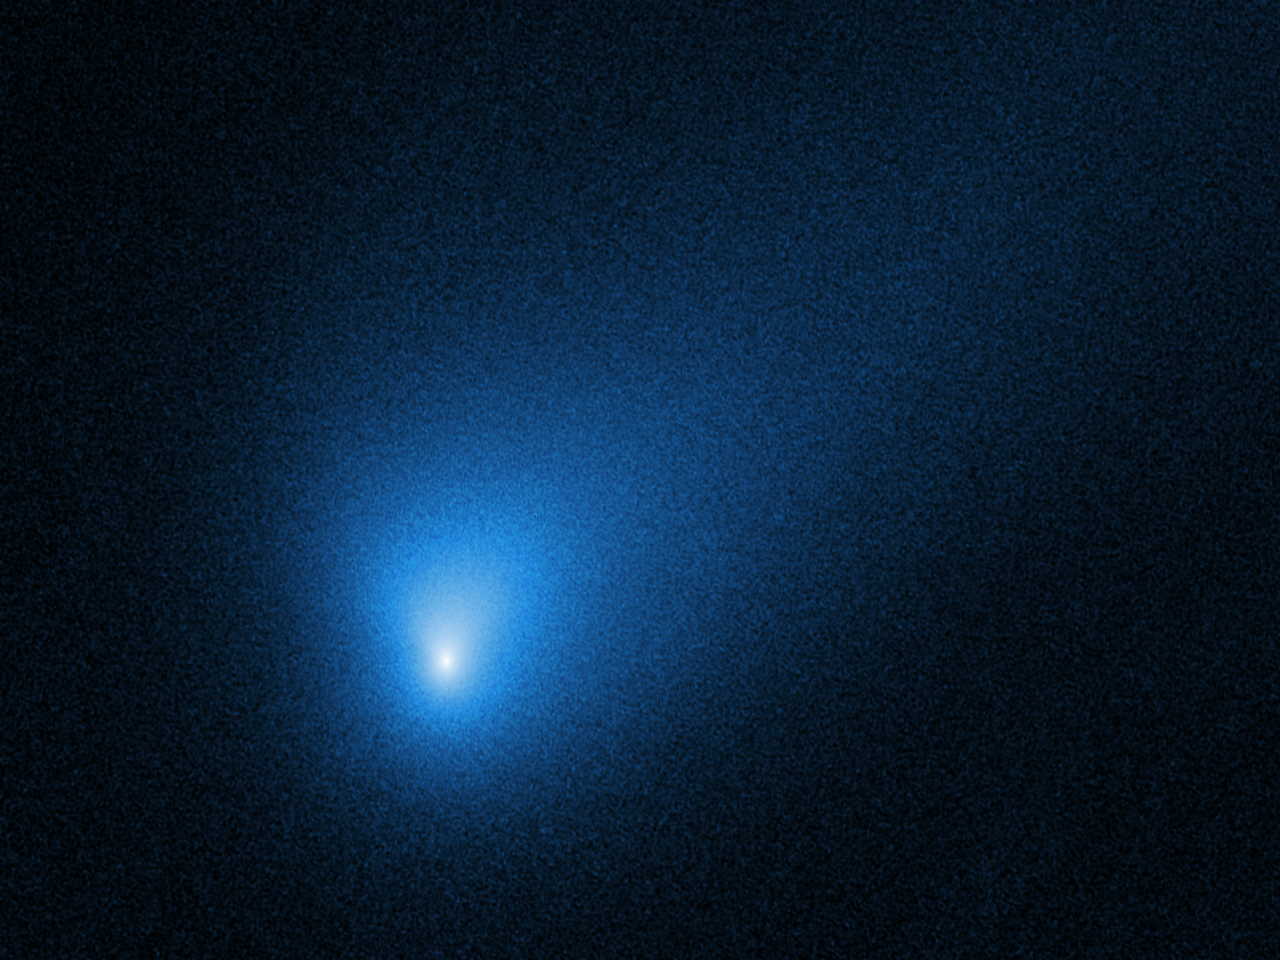 Міжзоряна комета Борисова, знята «Габблом». NASA, ESA, and D. Jewitt (UCLA)